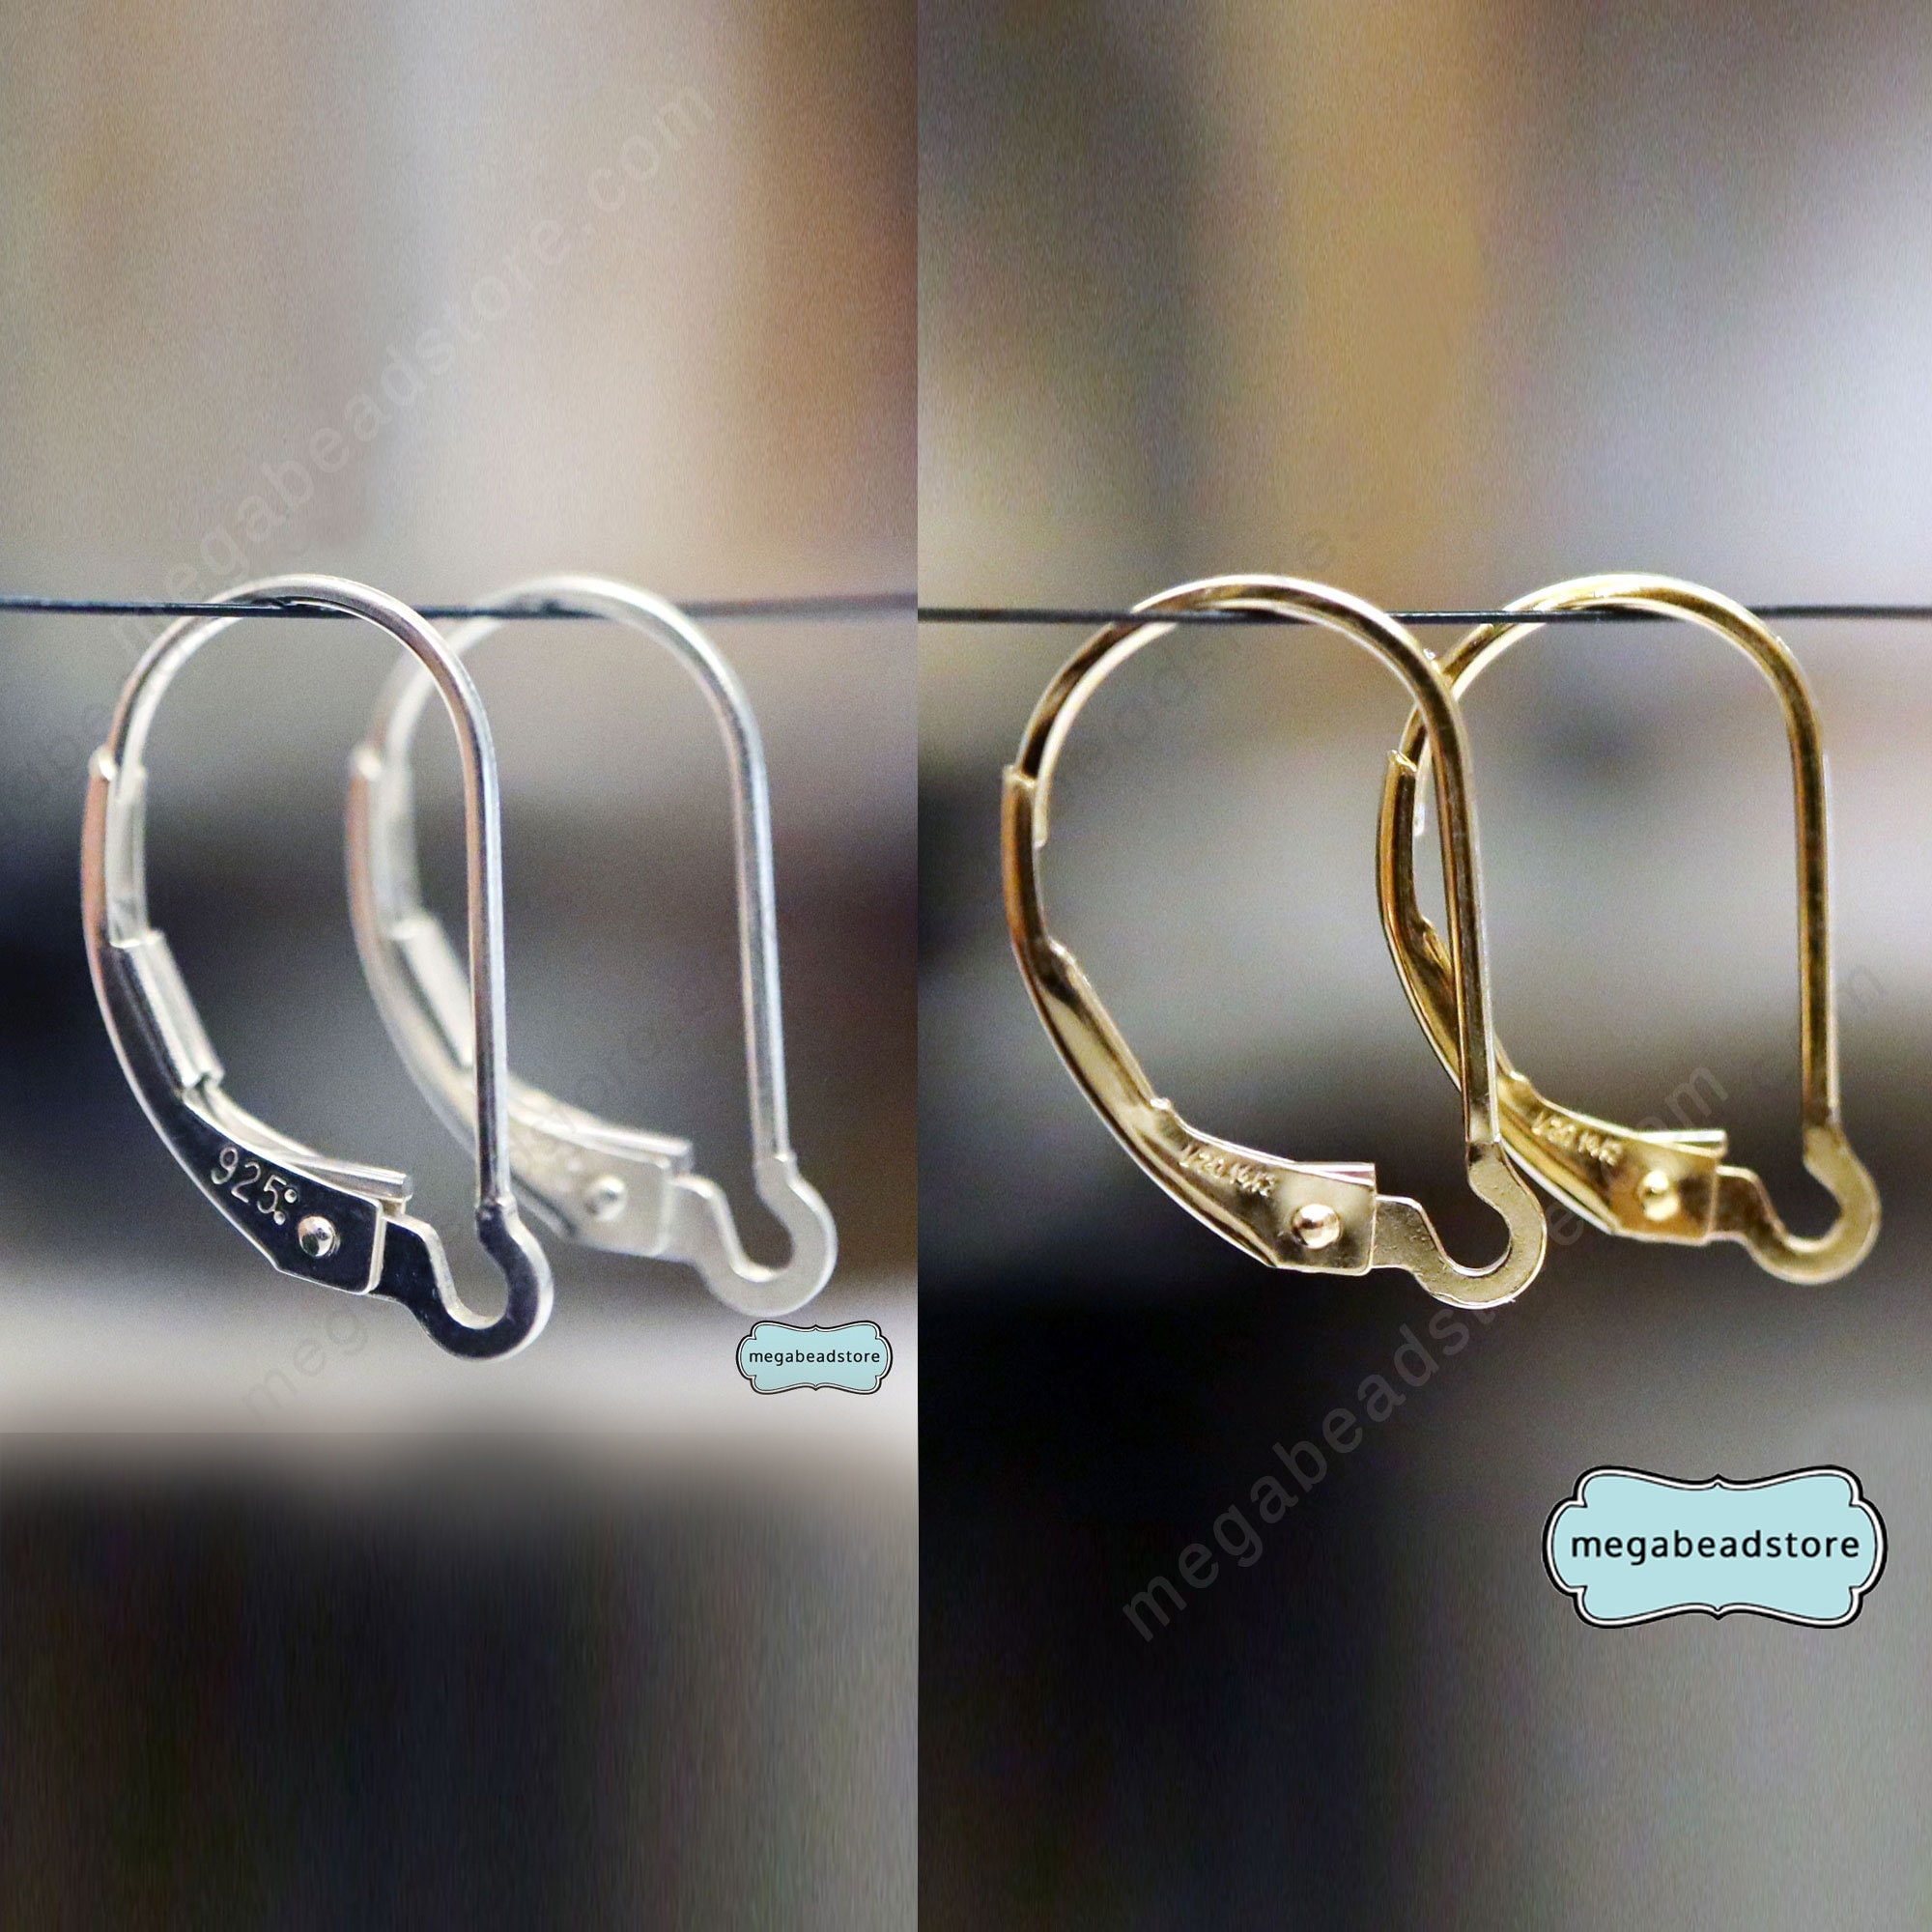 Sterling Silver Leverback Earring Hook with Closed Loop #97449